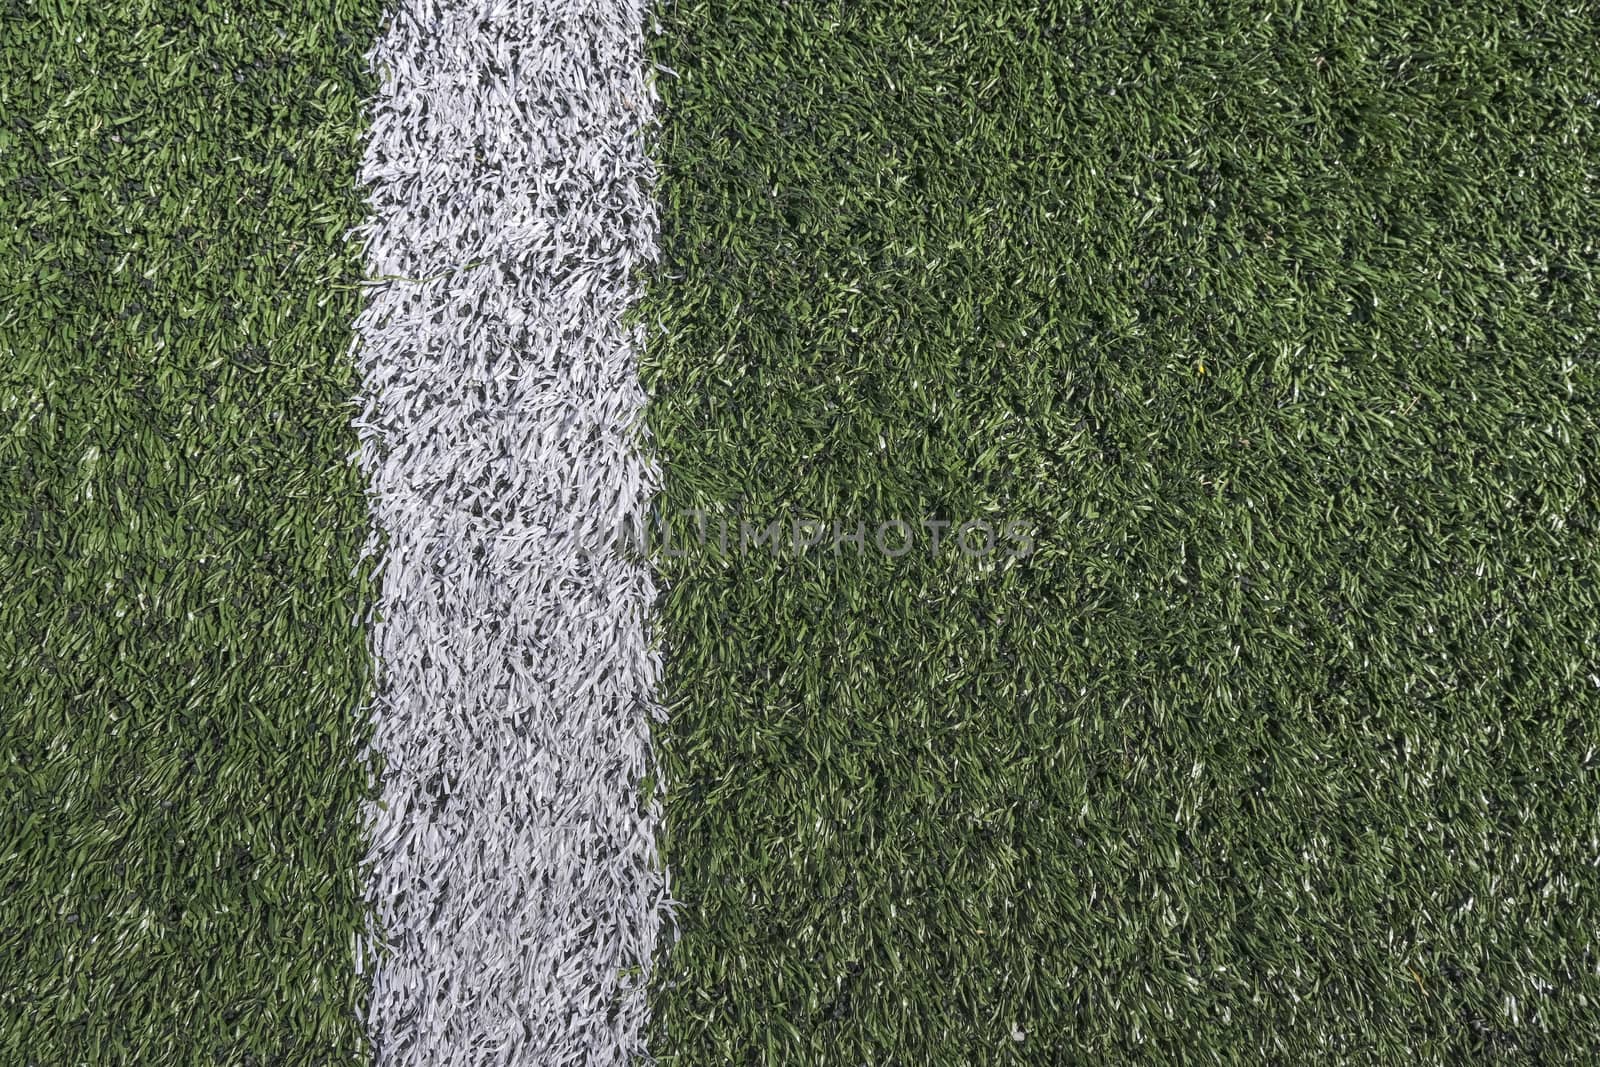 White stripe on a bright green artificial grass soccer field